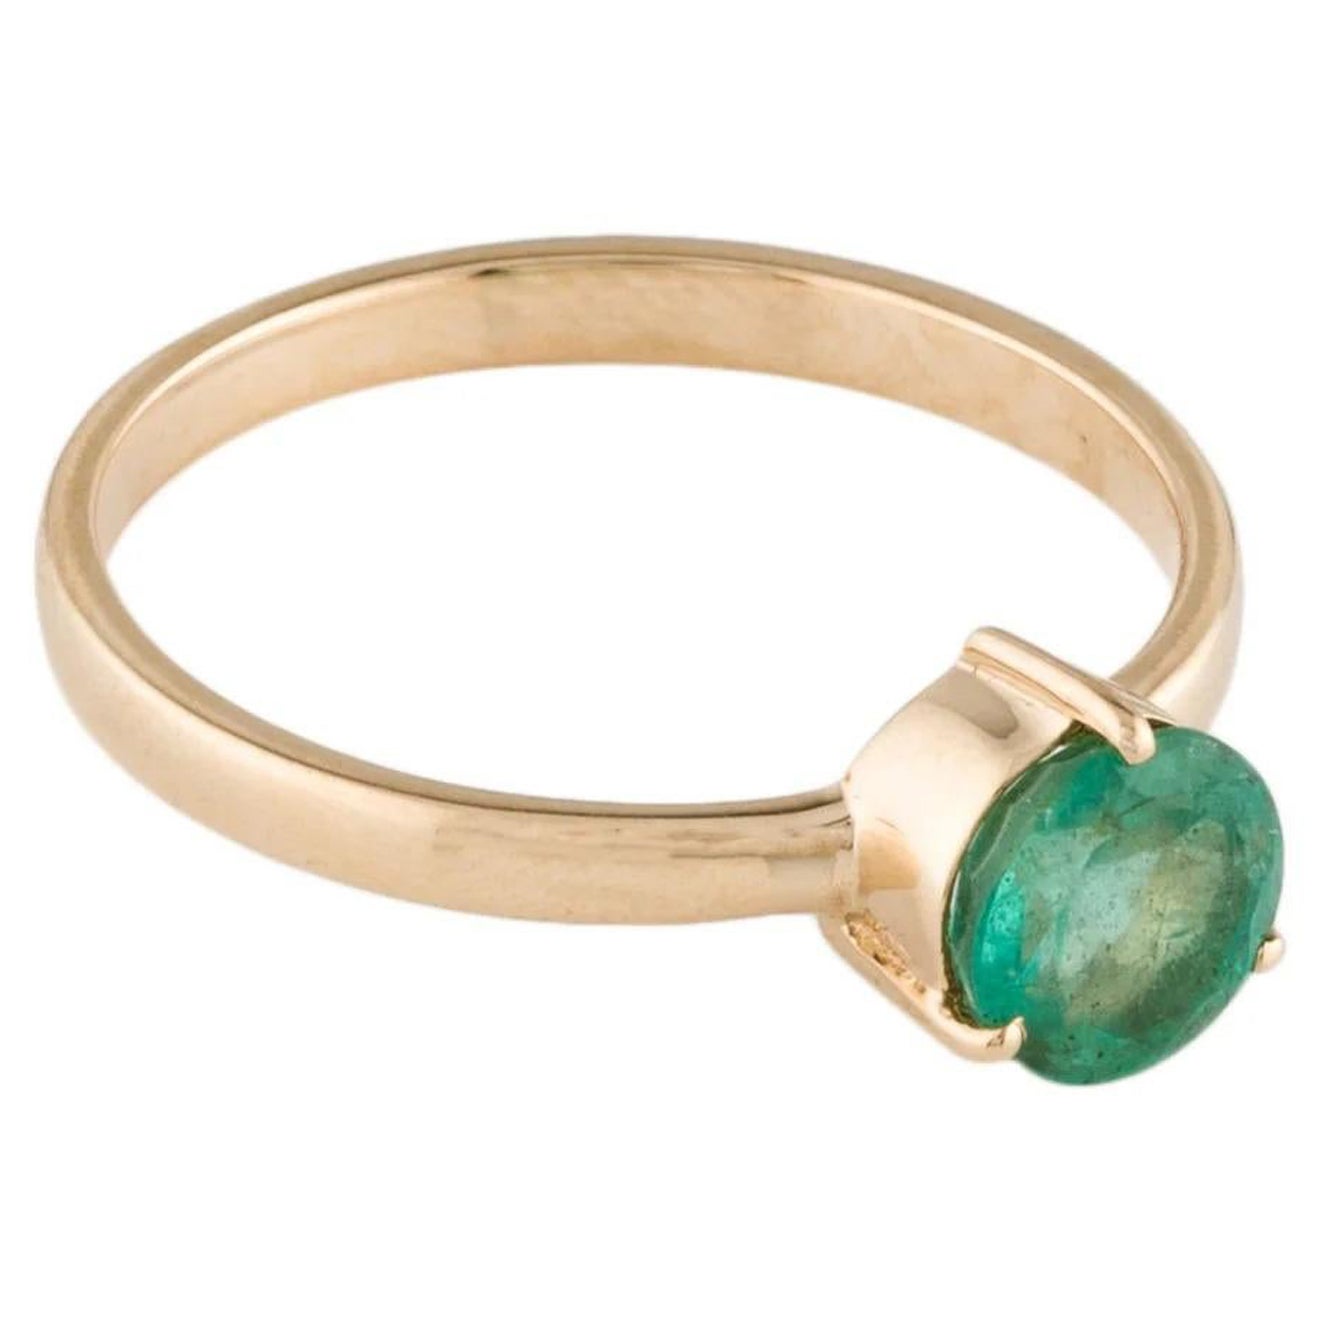 Vintage 14K Emerald Cocktail Ring, Size 6.75 - Elegant Green Gemstone Jewelry